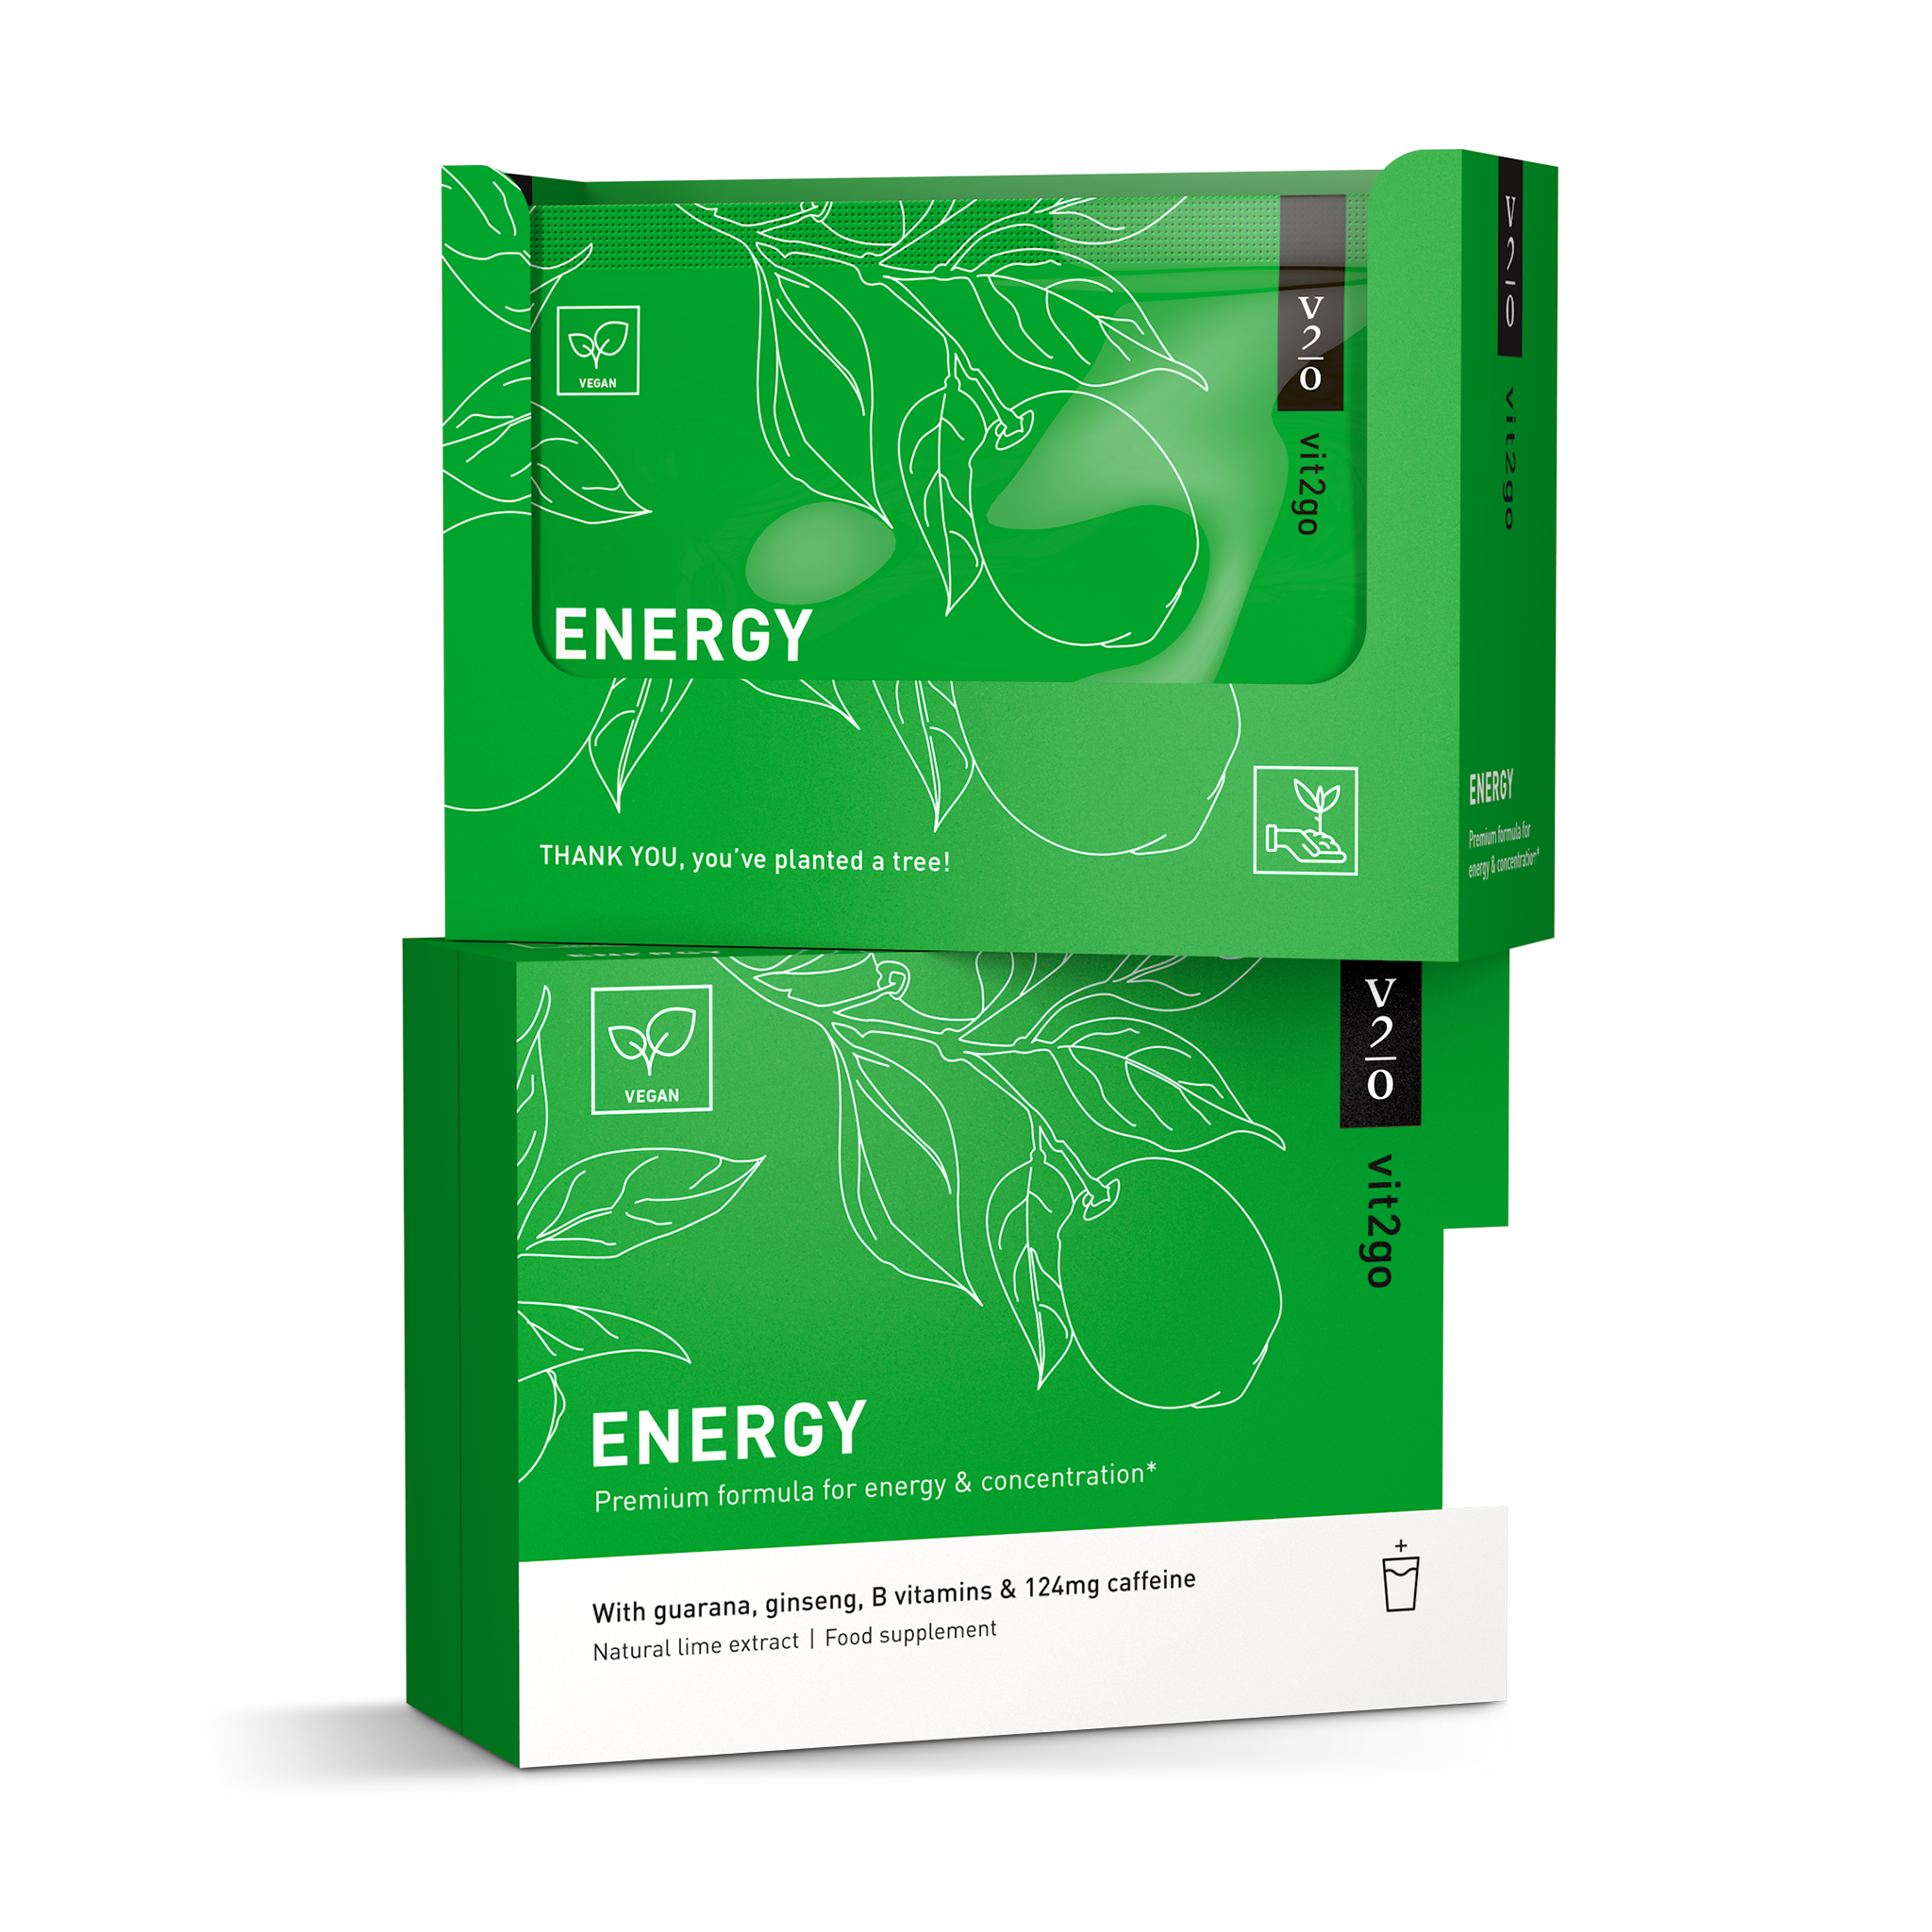 ENERGY 10-PACKET BOX